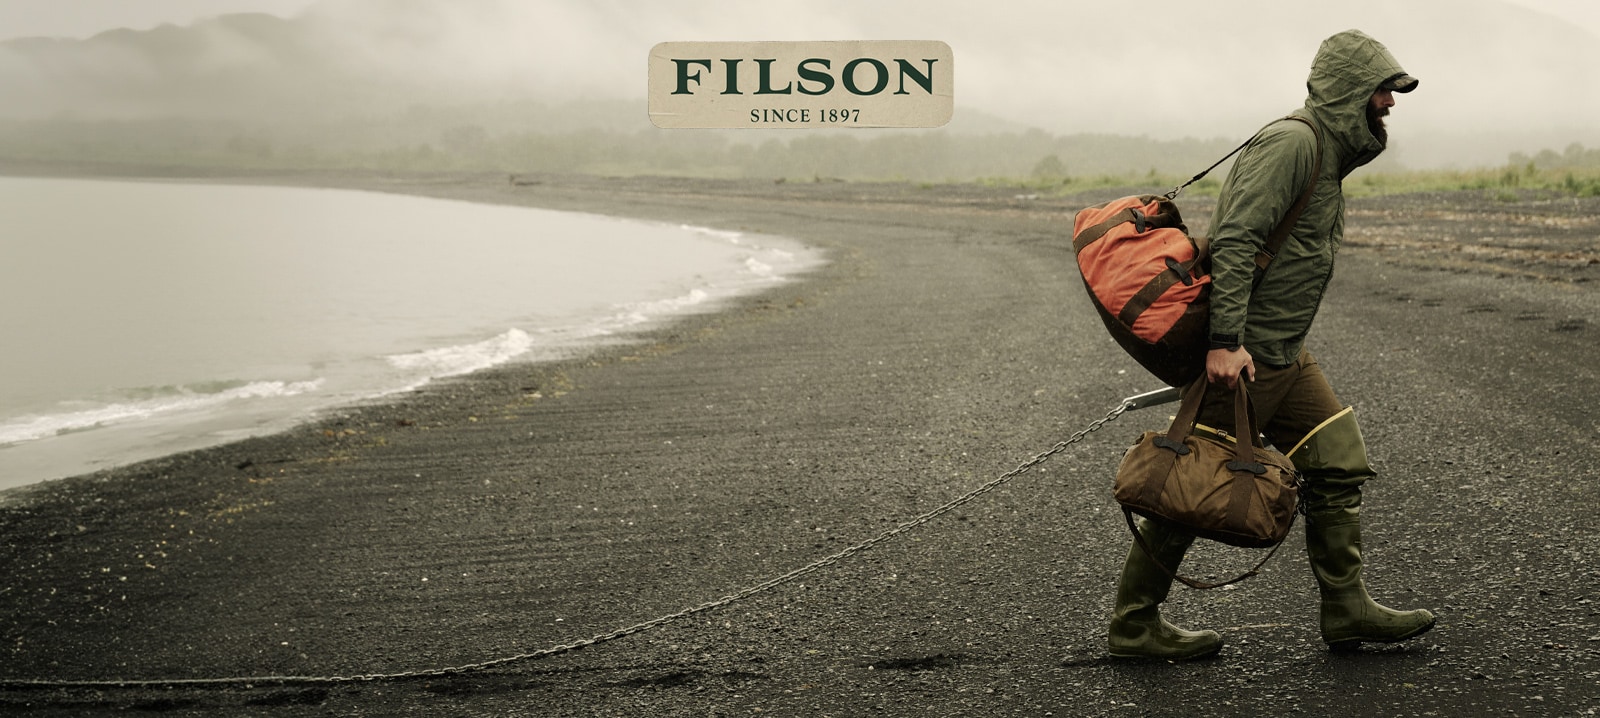 filson logo and man carrying filson bag